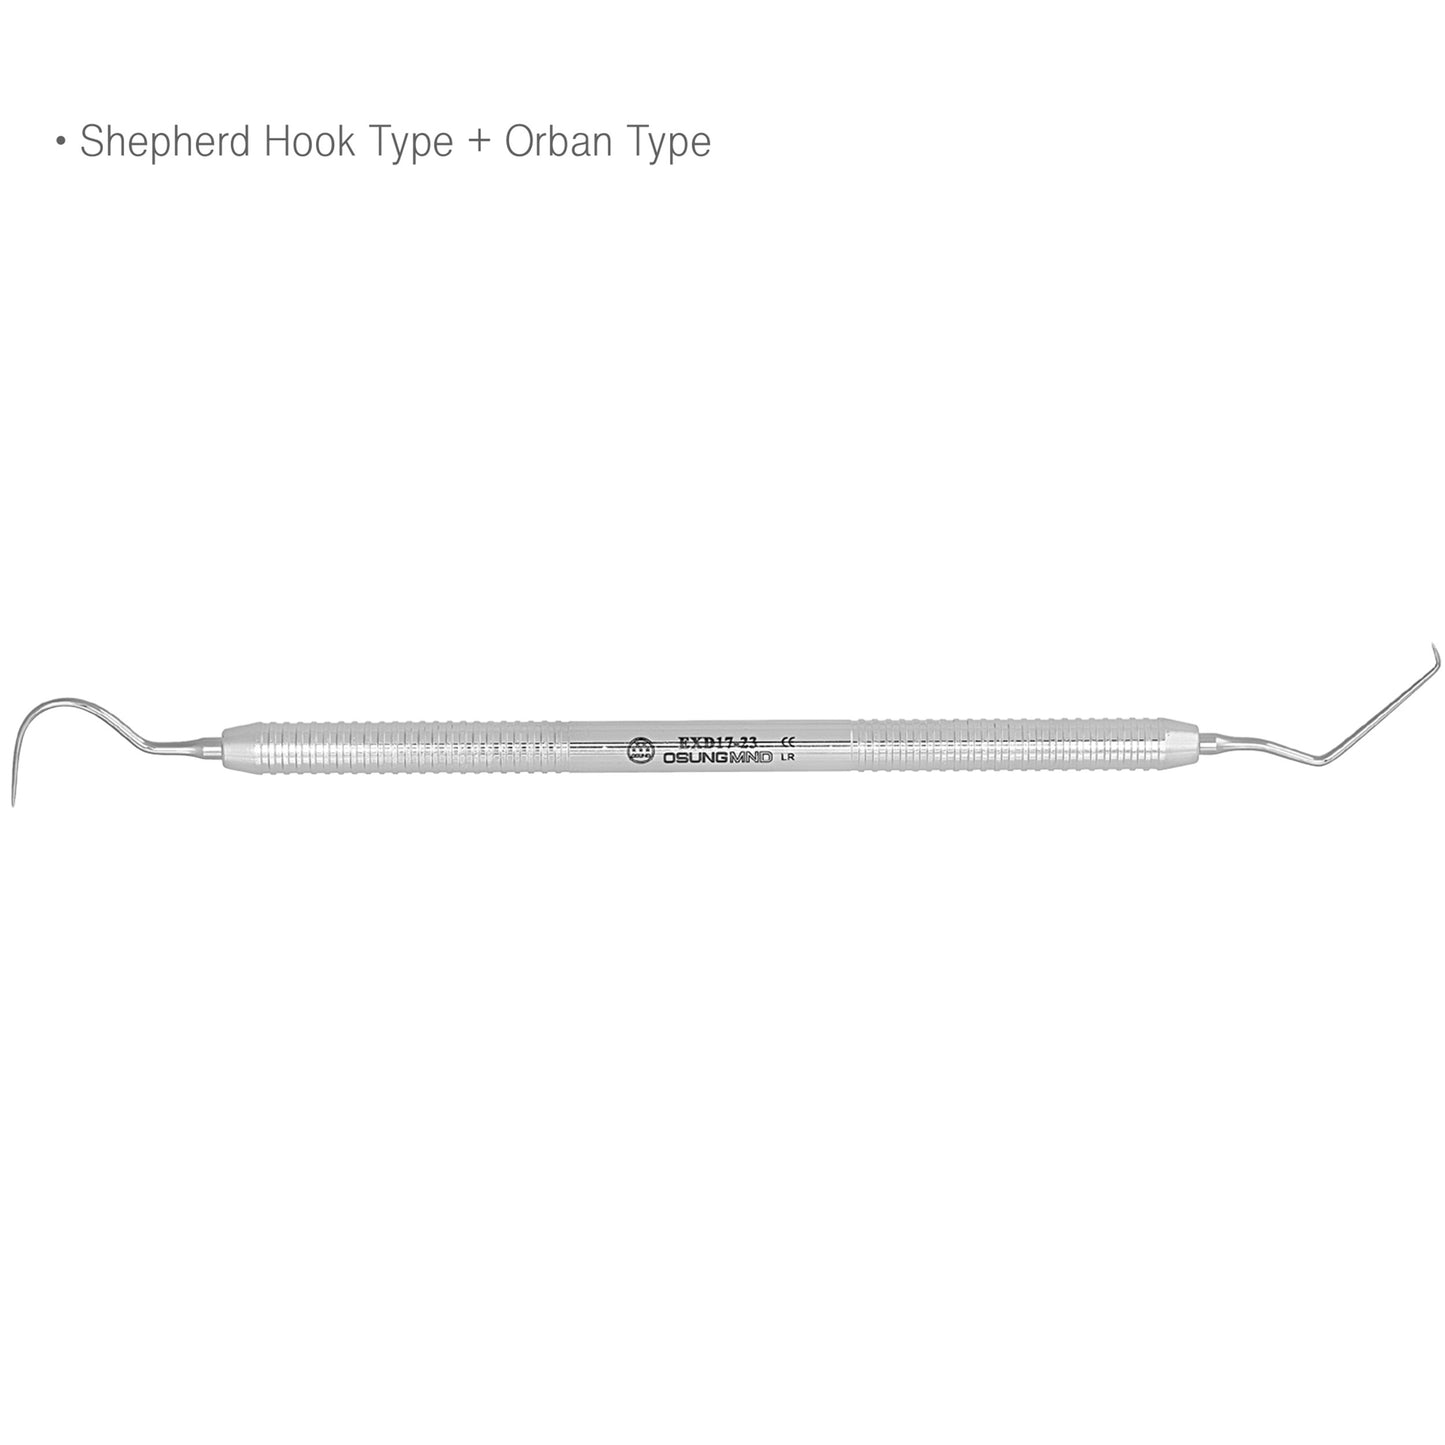 Osung 17/23 Shepherd Hook + Orban Type Dental Explorer Premium -EXD17-23